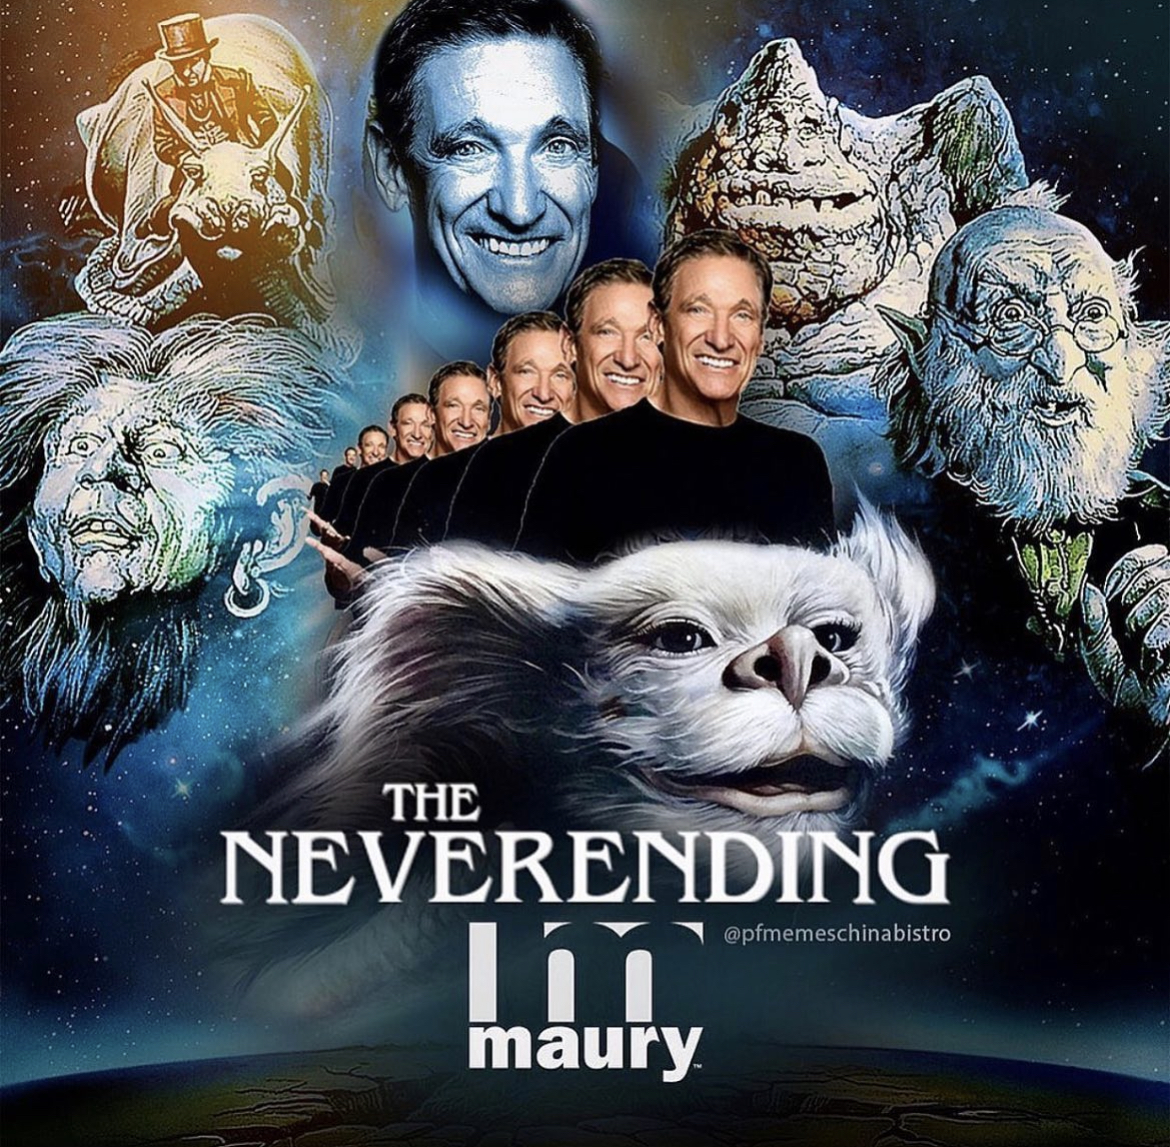 PFMemesChinaBistro Memes - neverending story movie poster - The Neverending n maury